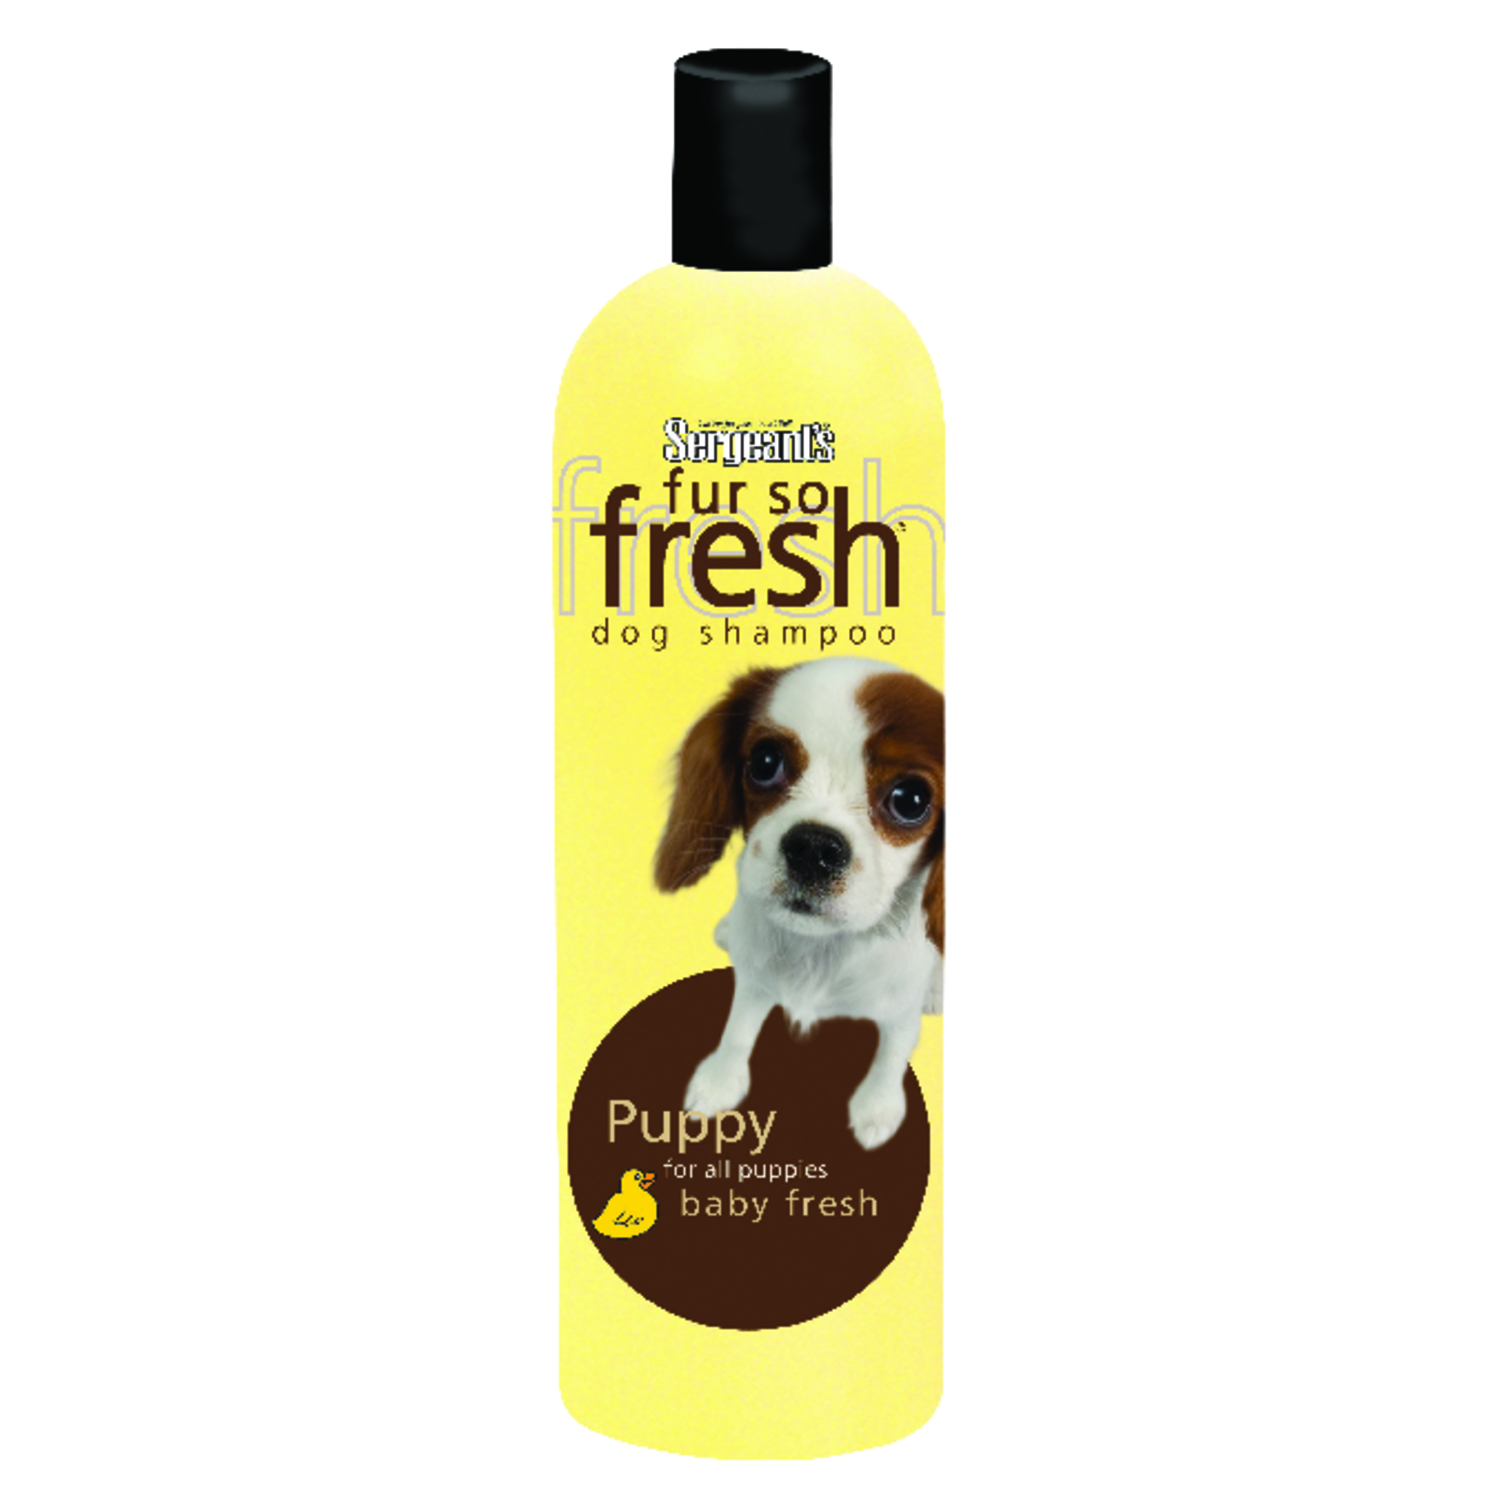 baby fresh dog shampoo